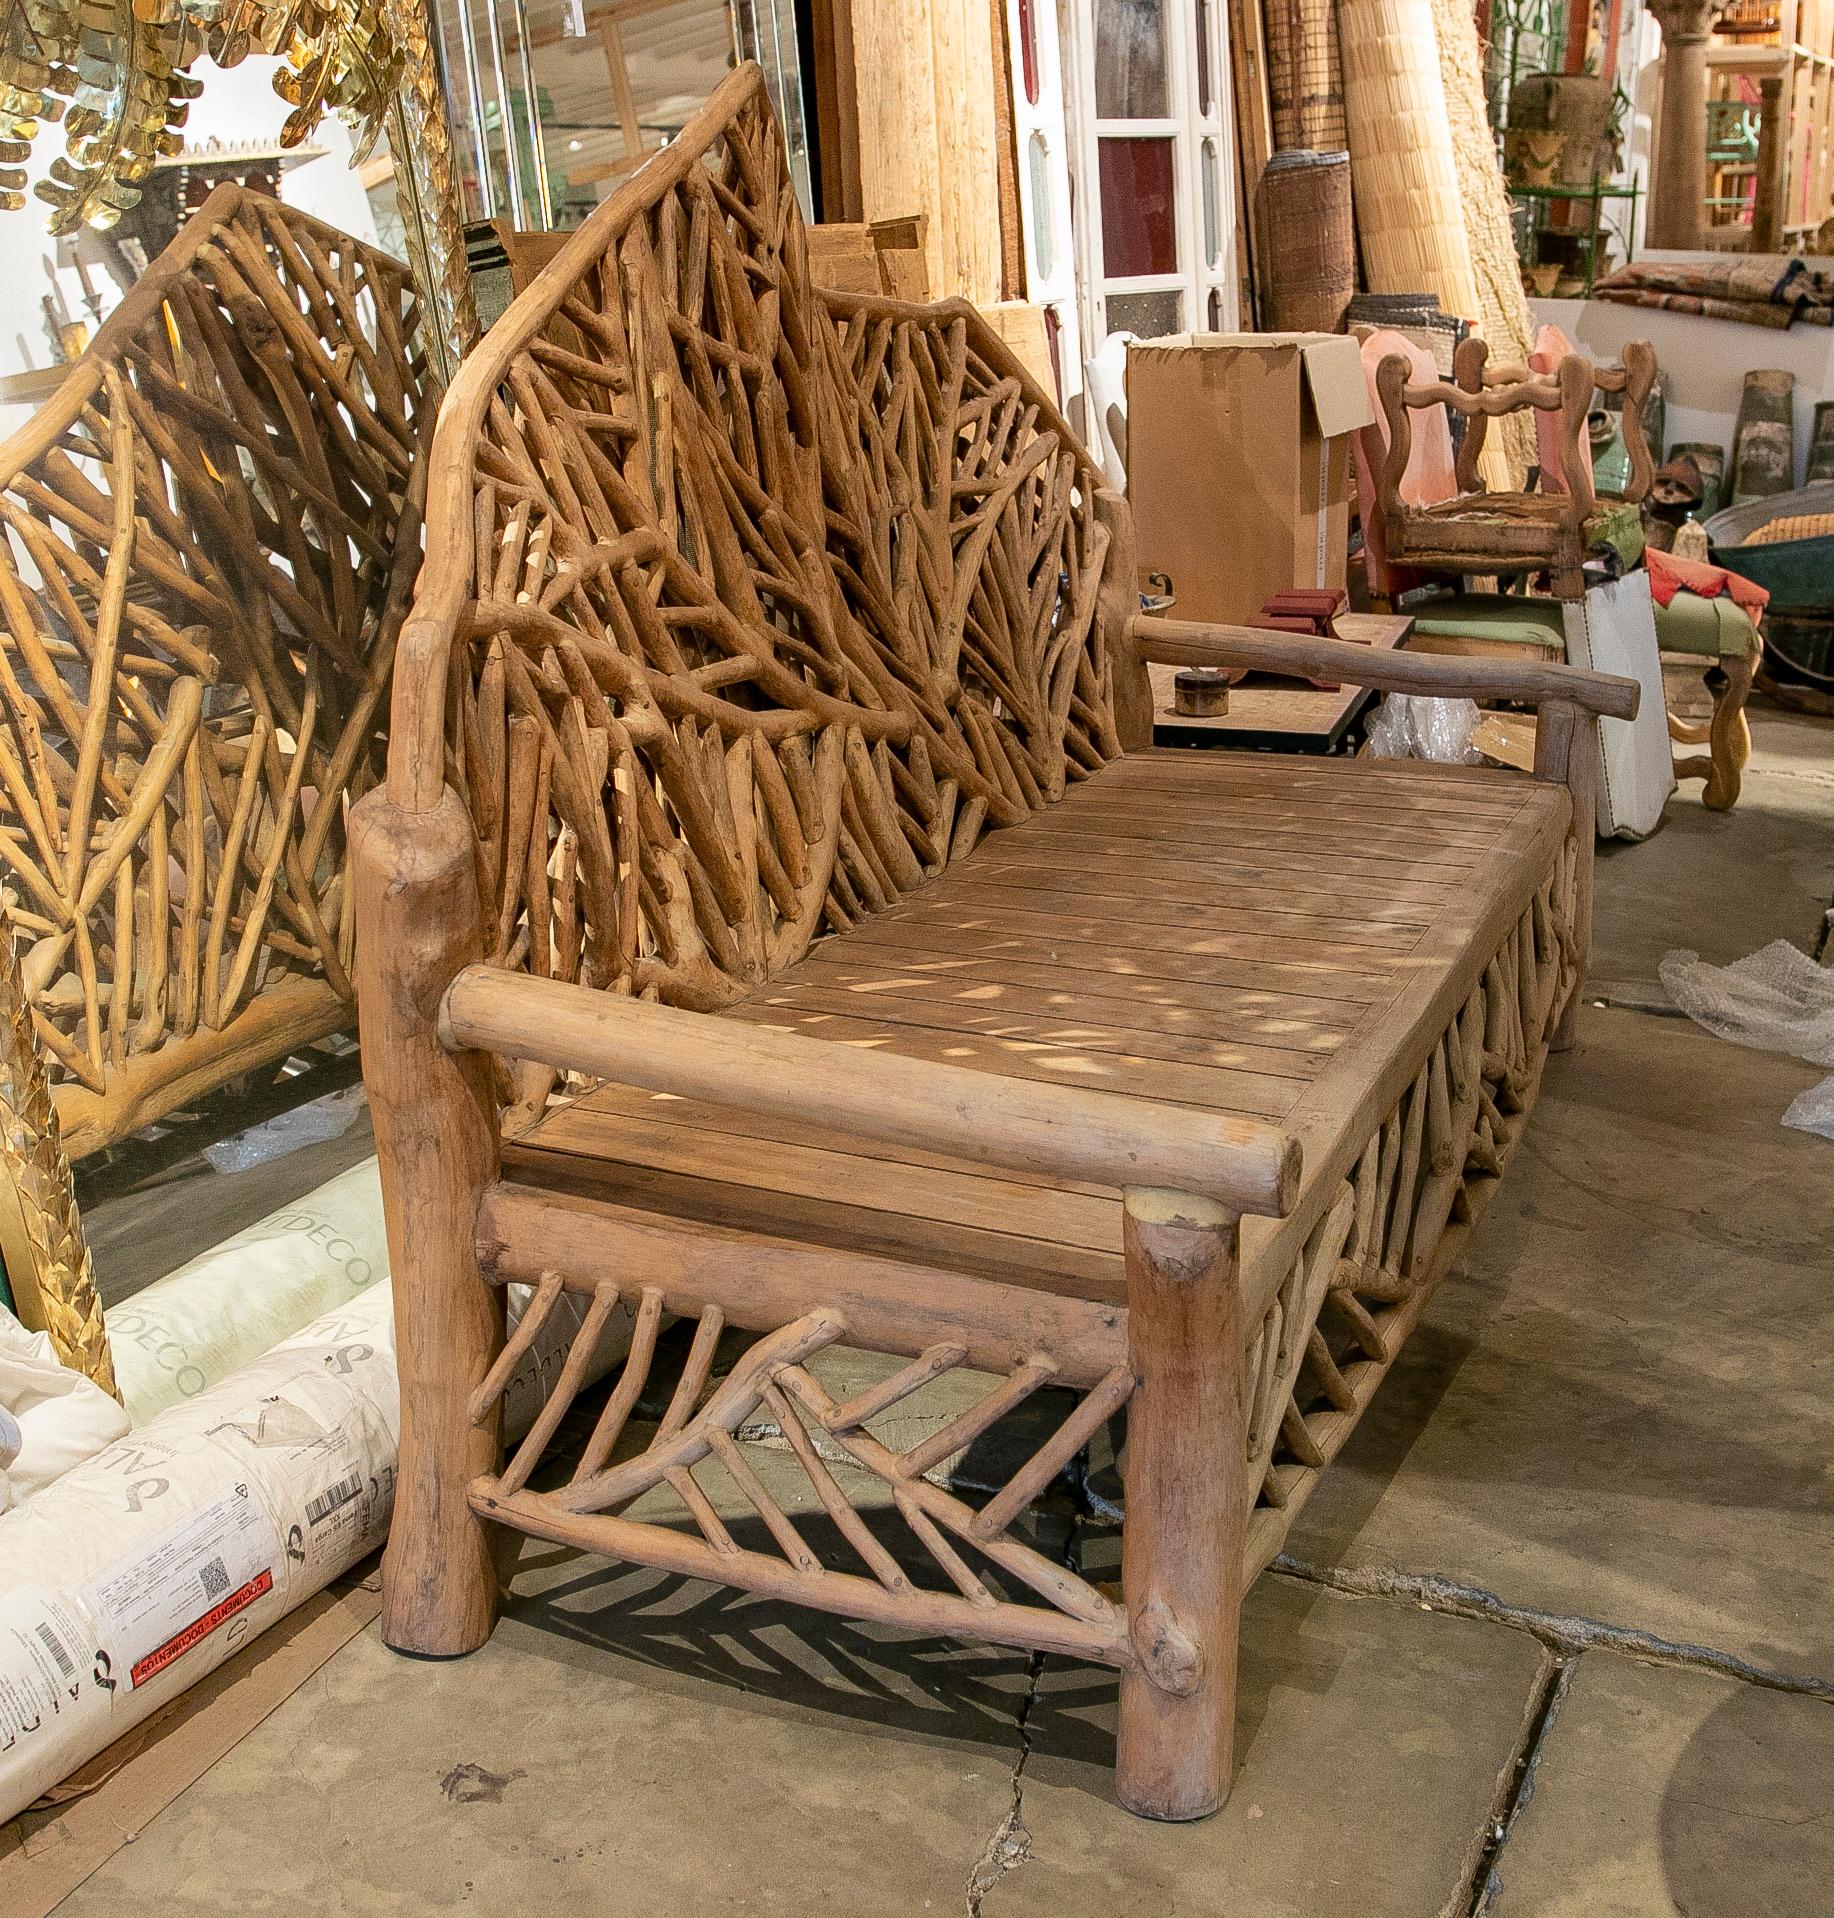 Asian Handmade Wooden Sofa Made of Wooden Logs for the Garden